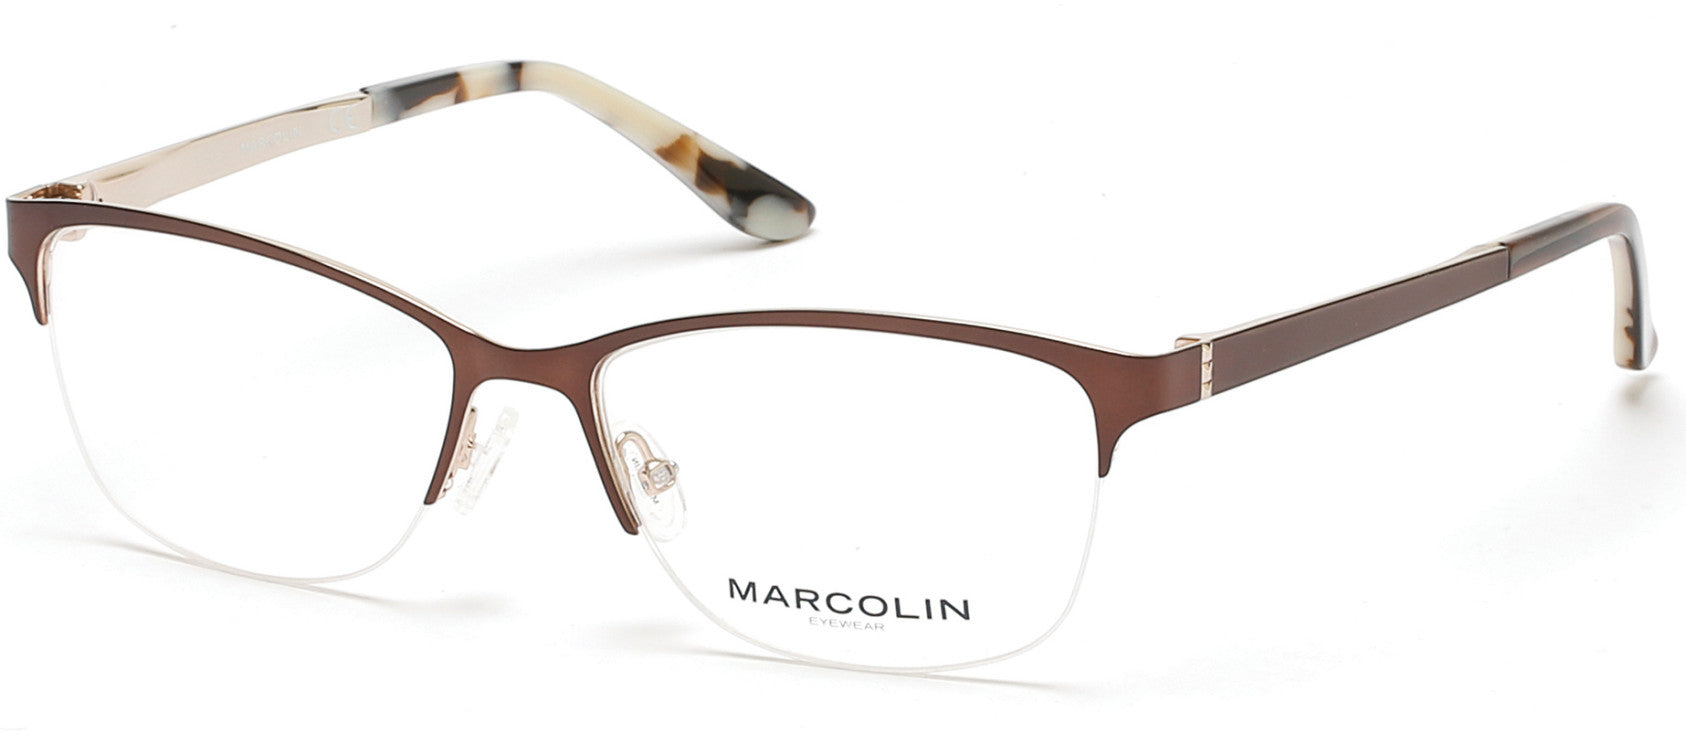 Marcolin MA5001 Eyeglasses 047-047 - Light Brown